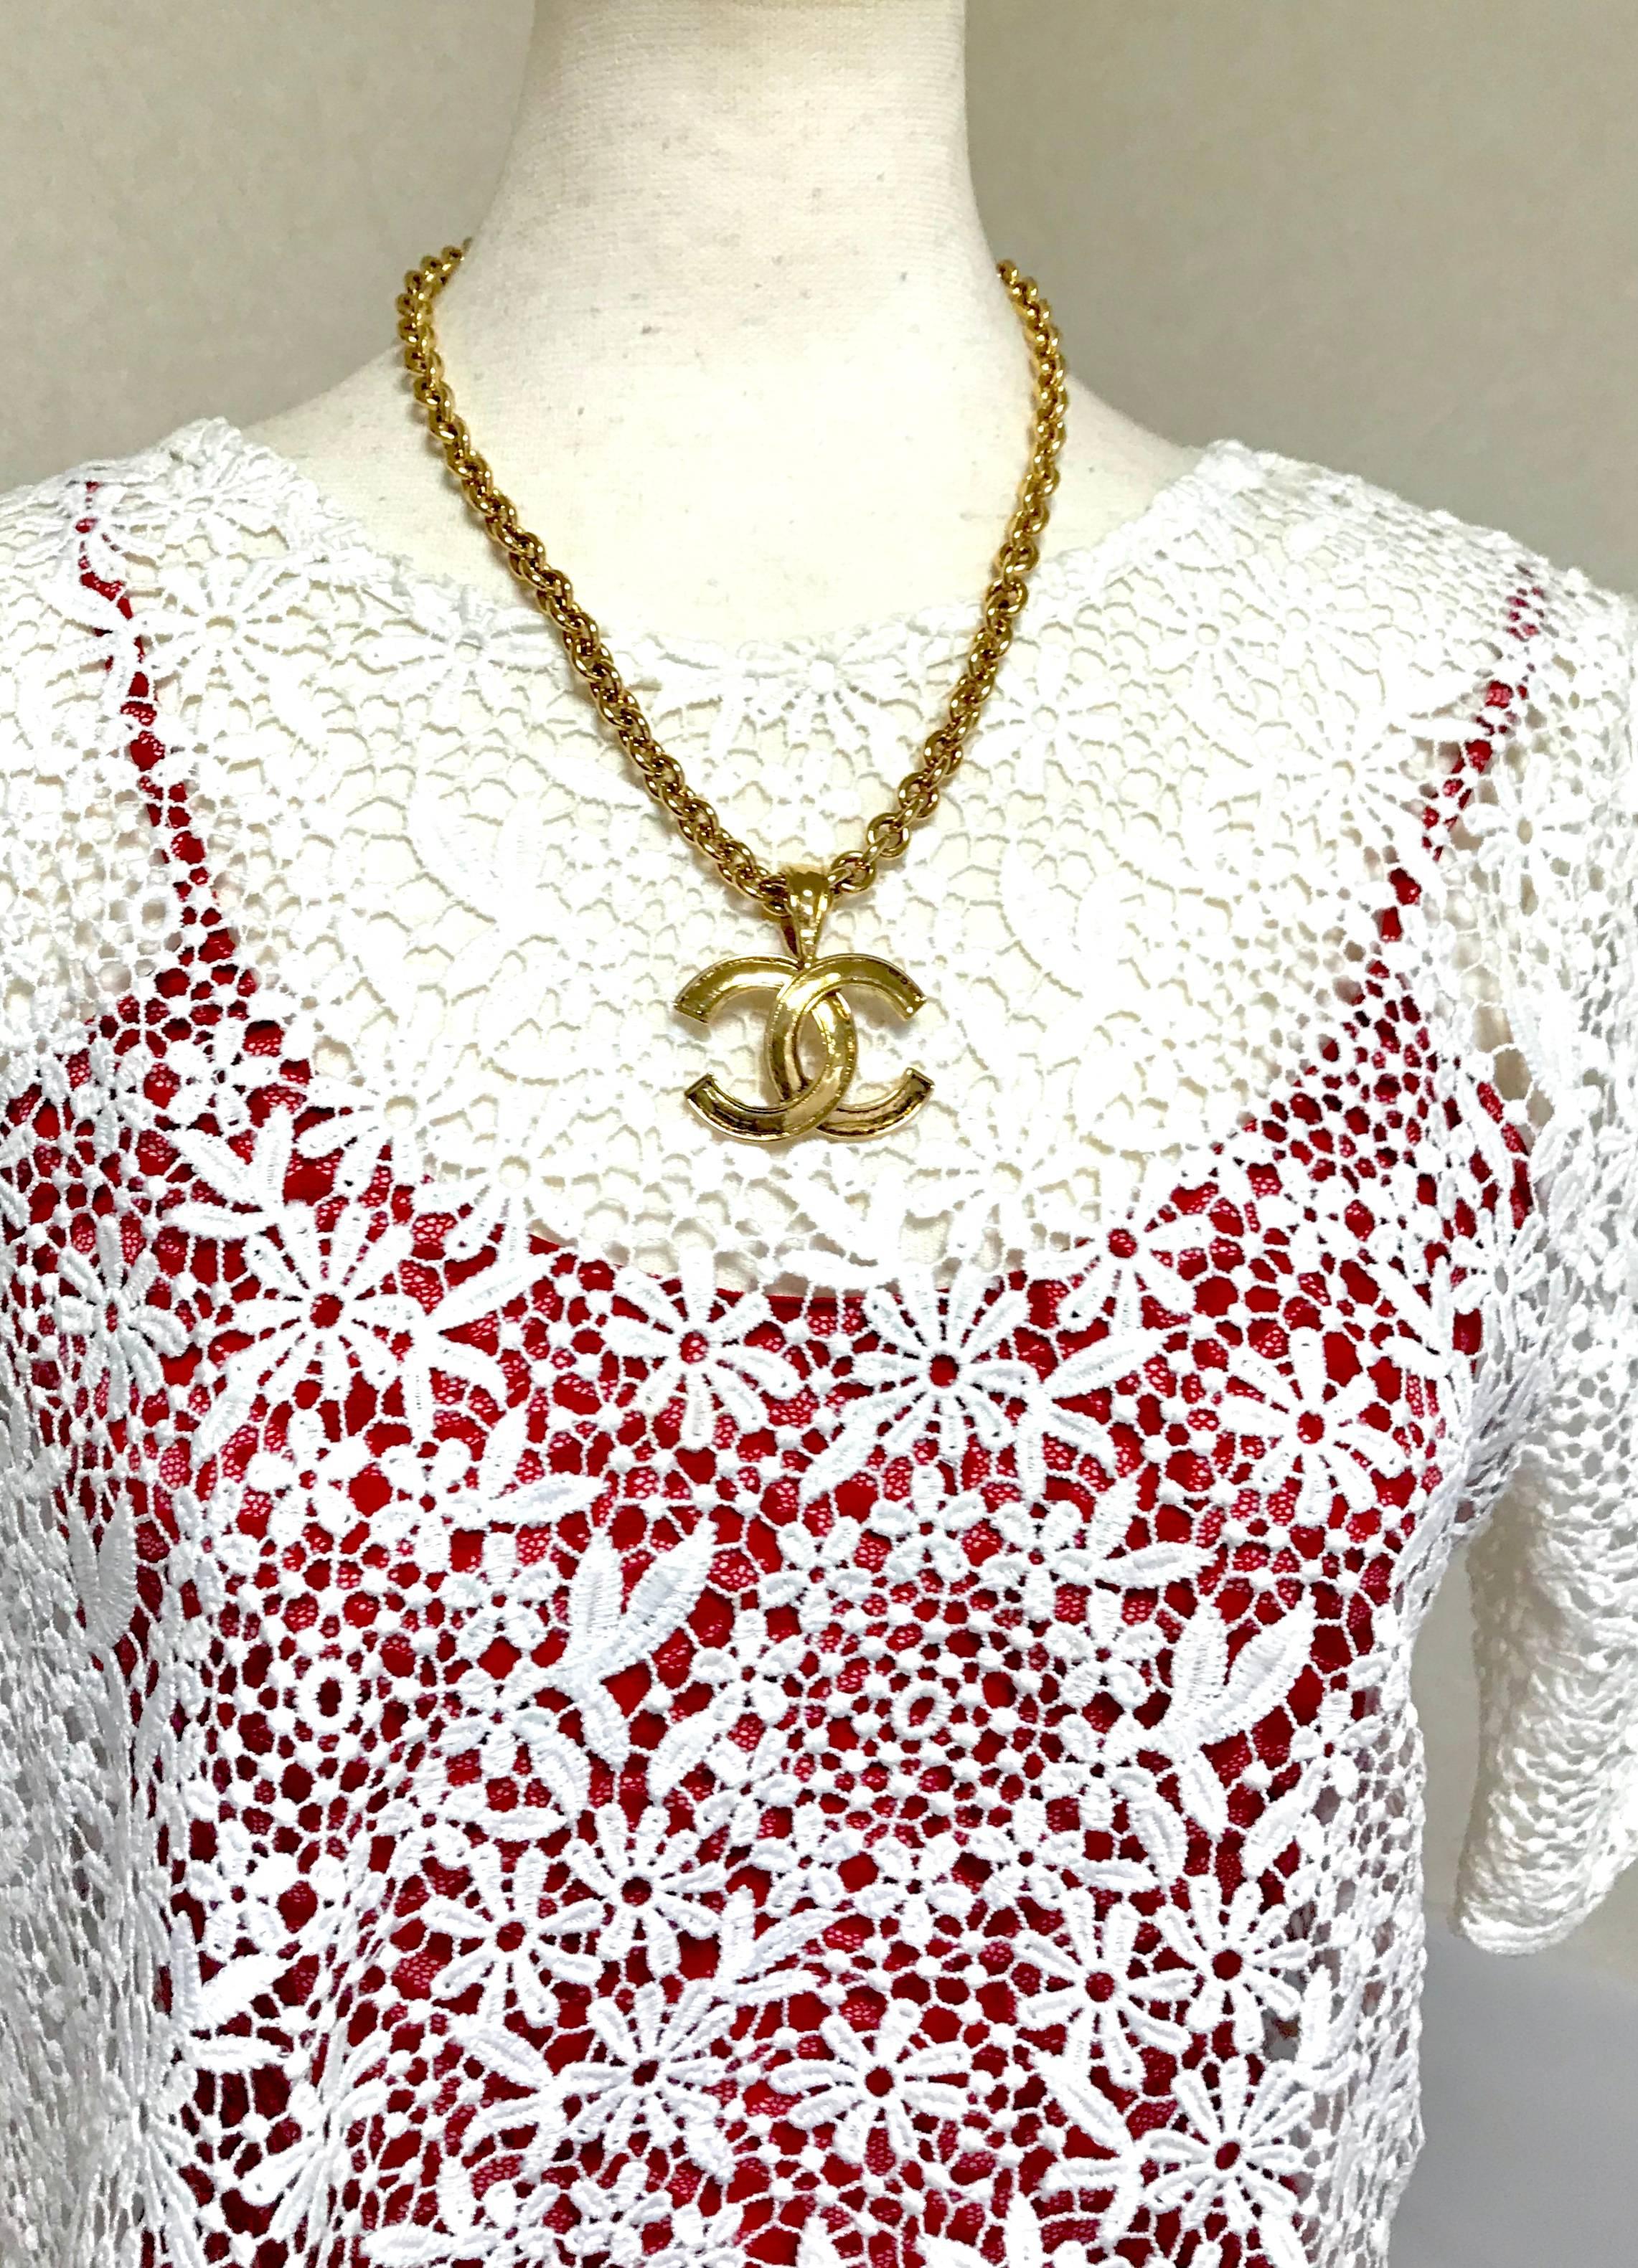 MINT. Vintage CHANEL golden chain necklace with large CC mark logo pendant top.  5